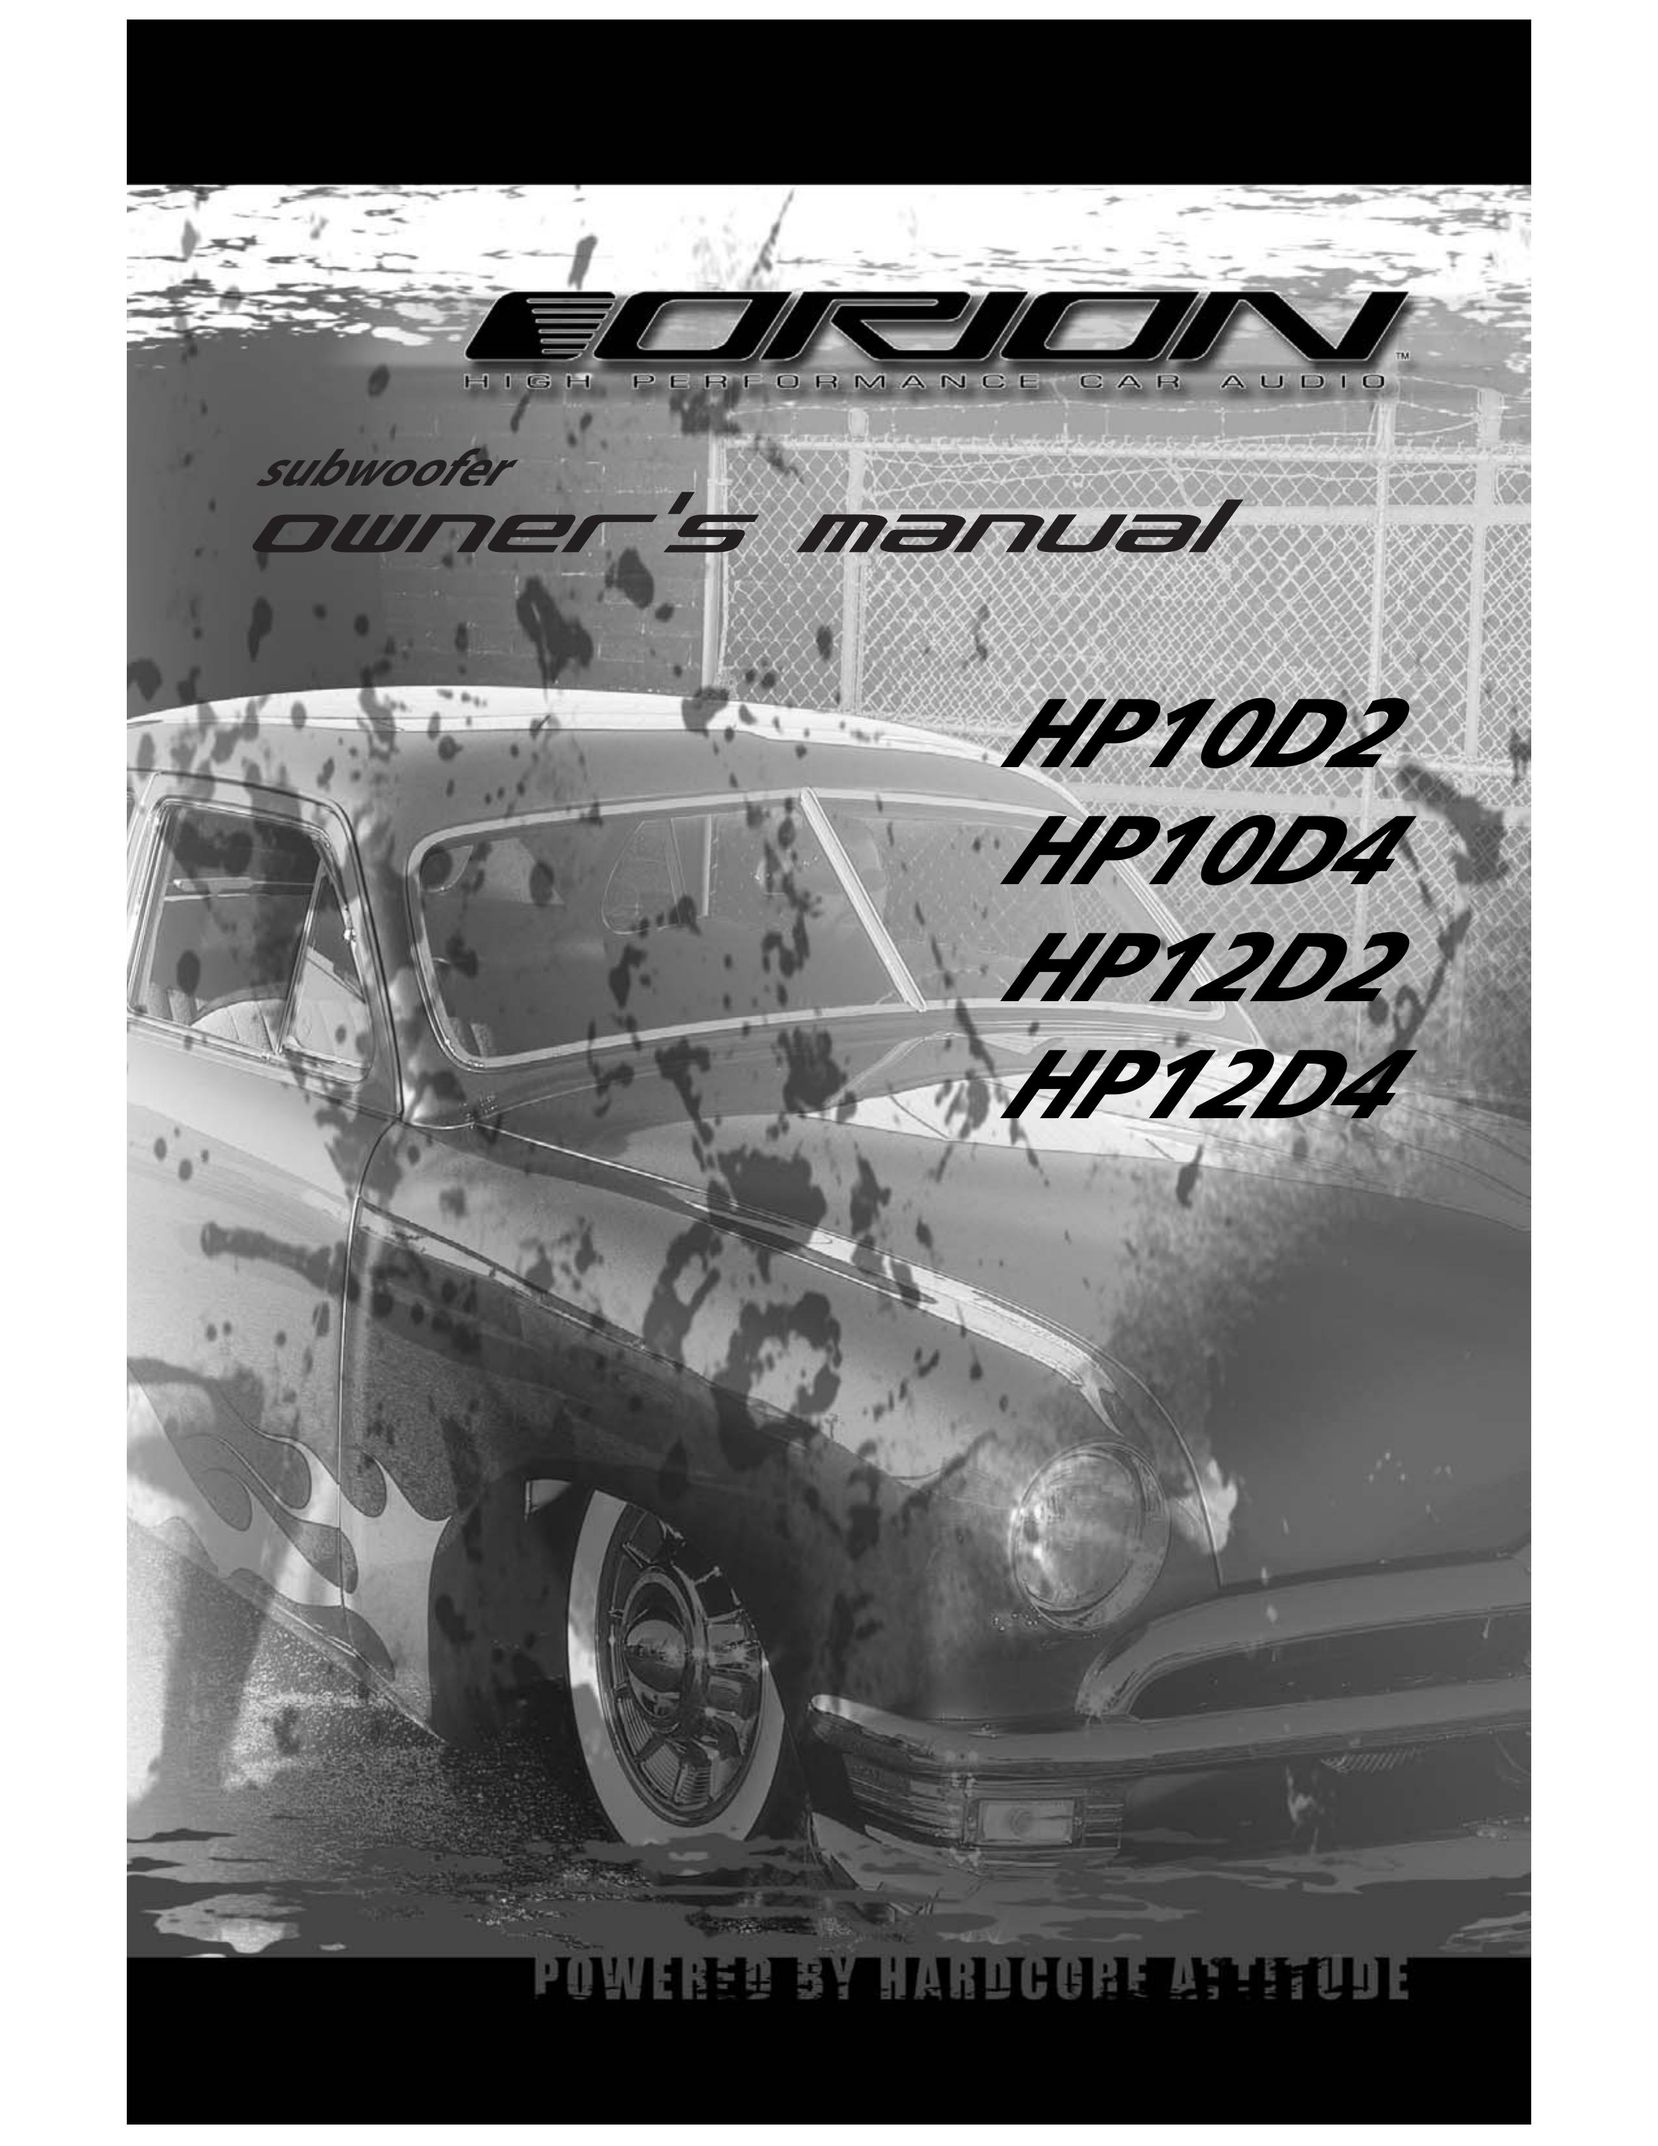 Orion Car Audio HP12D4 Speaker User Manual